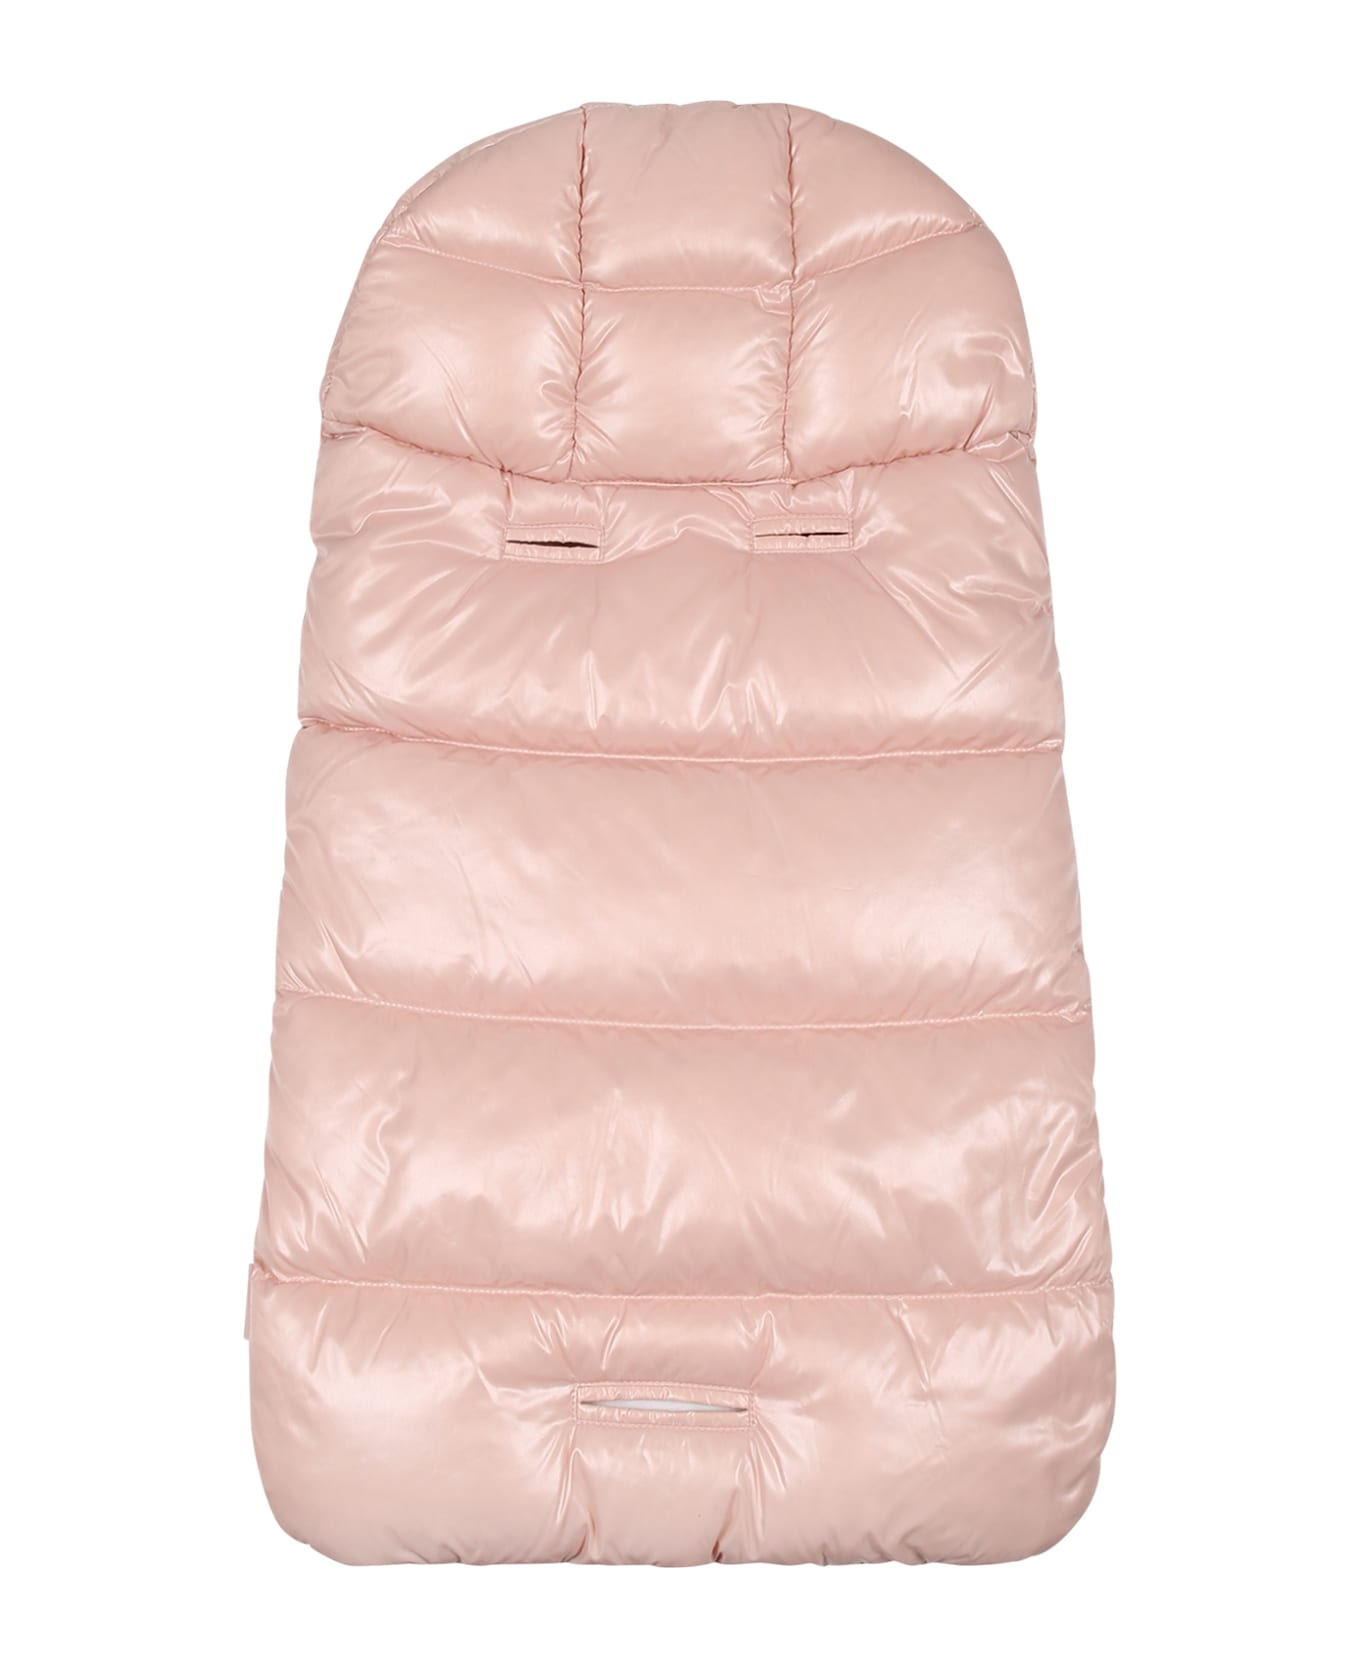 Moncler Pink Sleeping Bag For Baby Girl With Logo - Pink アクセサリー＆ギフト